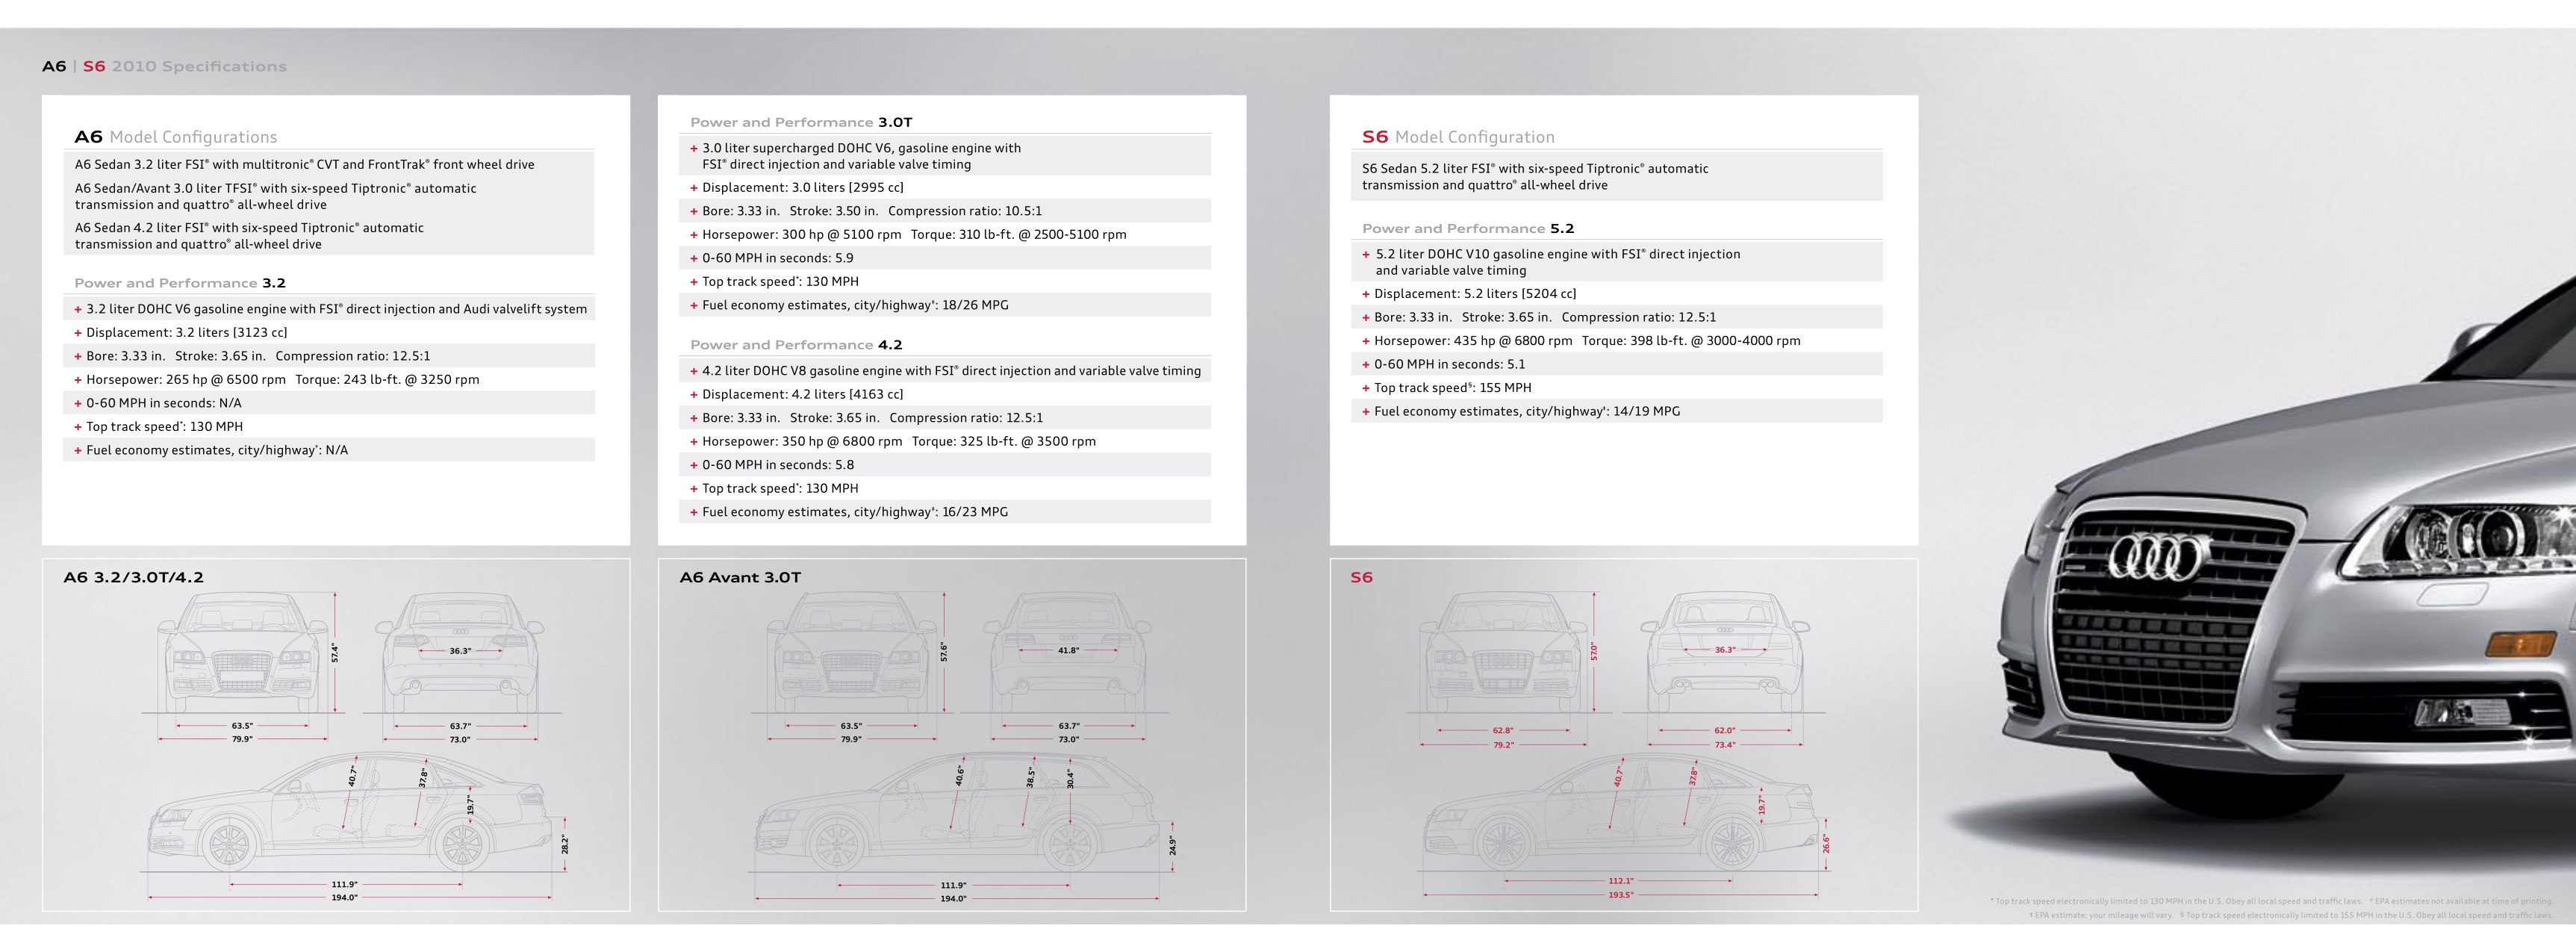 2010 Audi A6 Brochure Page 1